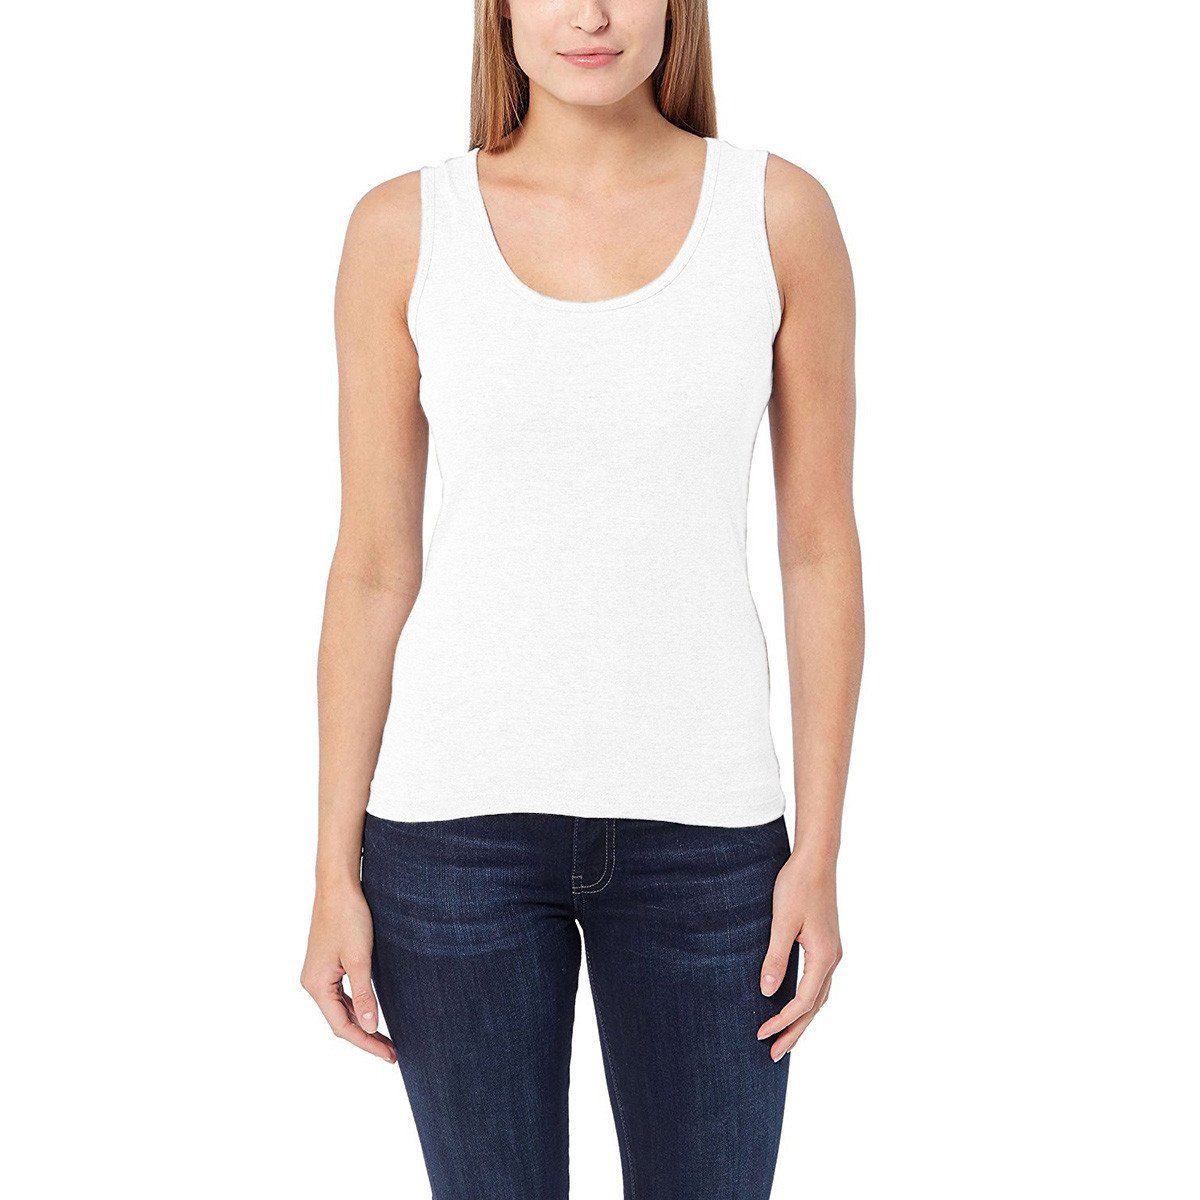 BYD Cropi Vest Women's Tee Shirt Image White XS 